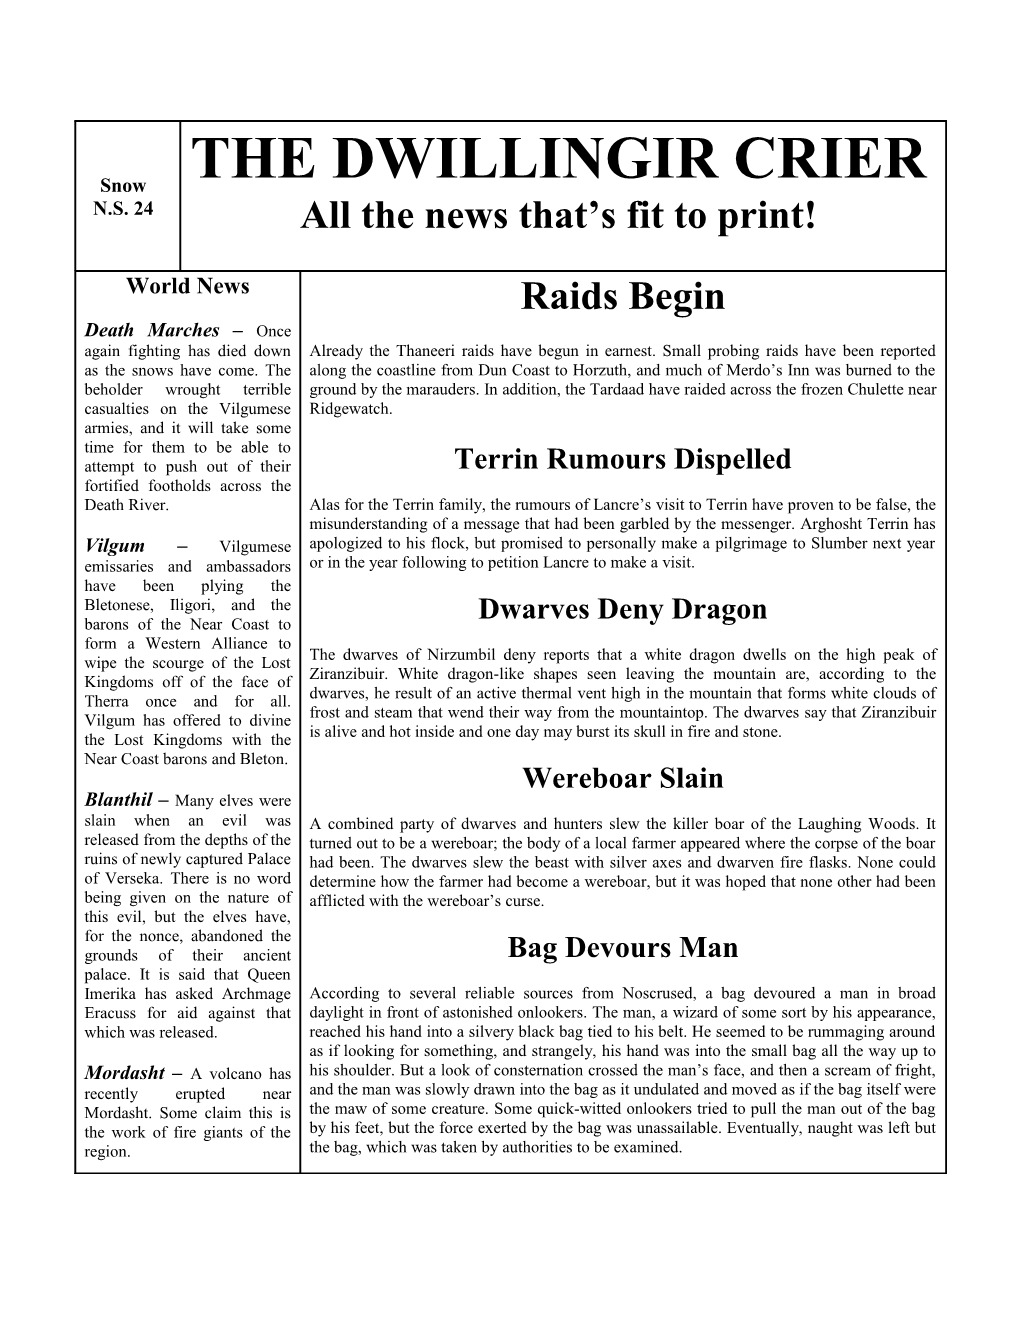 The Dwillingir Crier